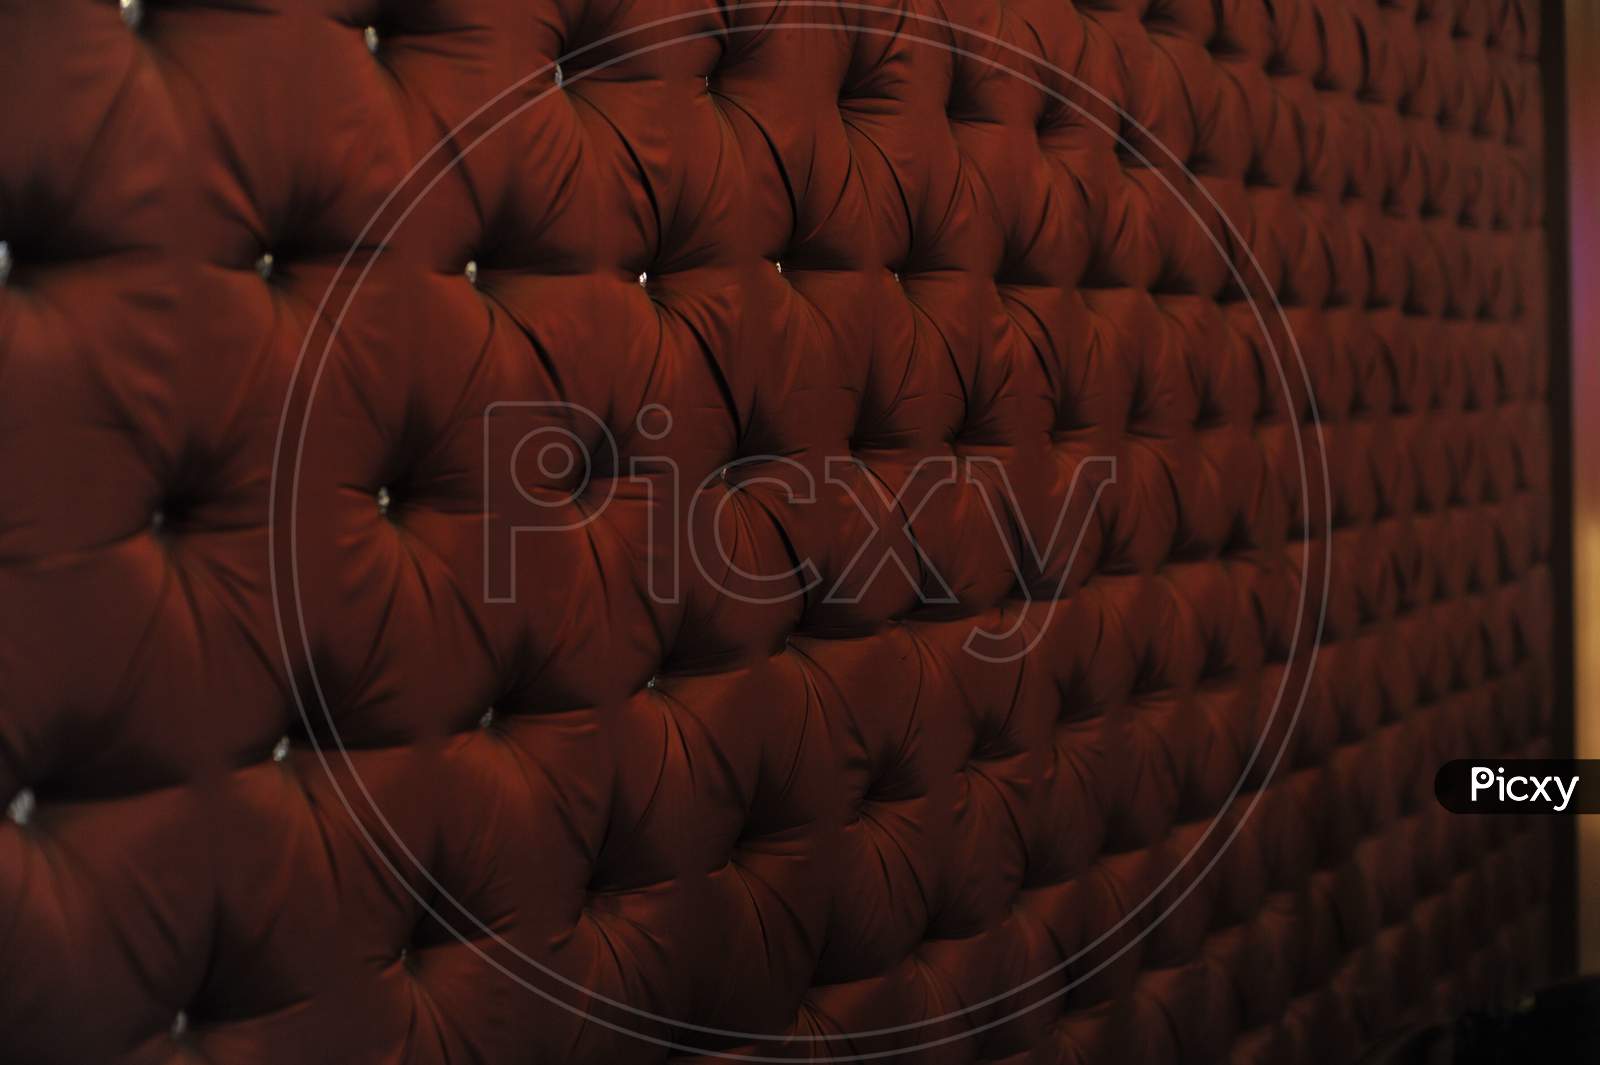 Sofa closeup texture background maroon colour